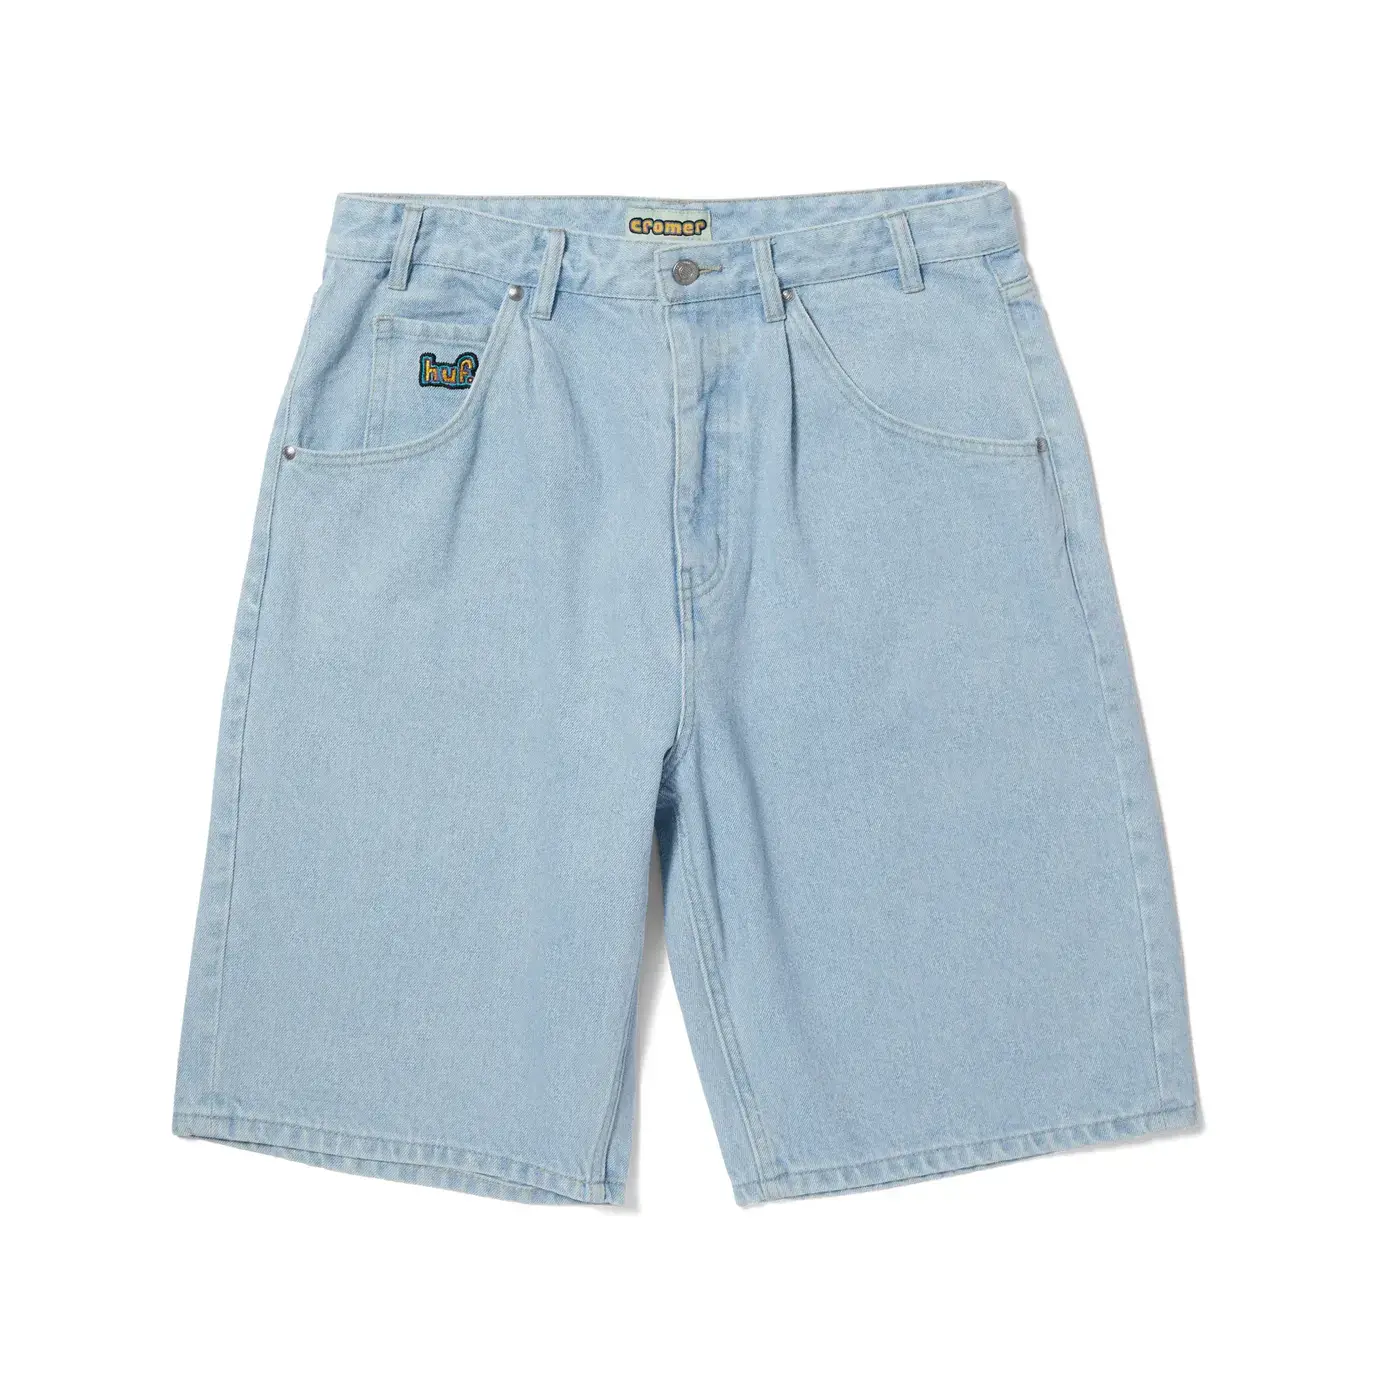 Cromer Shorts (Light Blue)